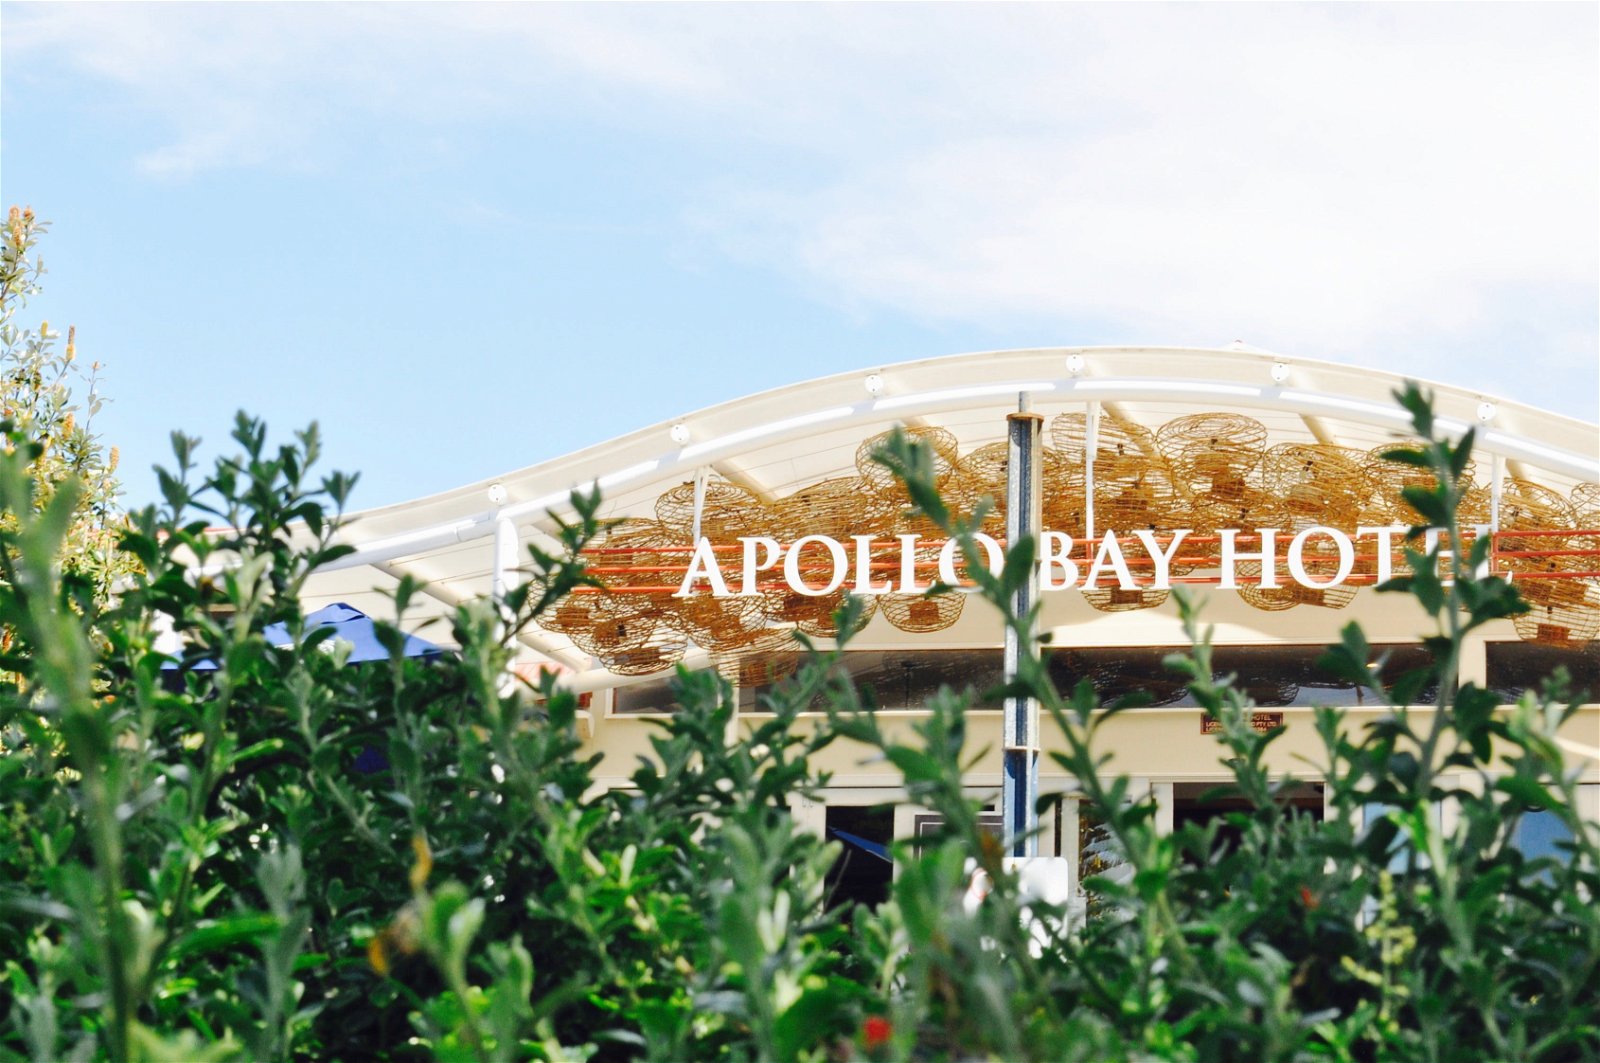 Apollo Bay Hotel - Accommodation Mooloolaba